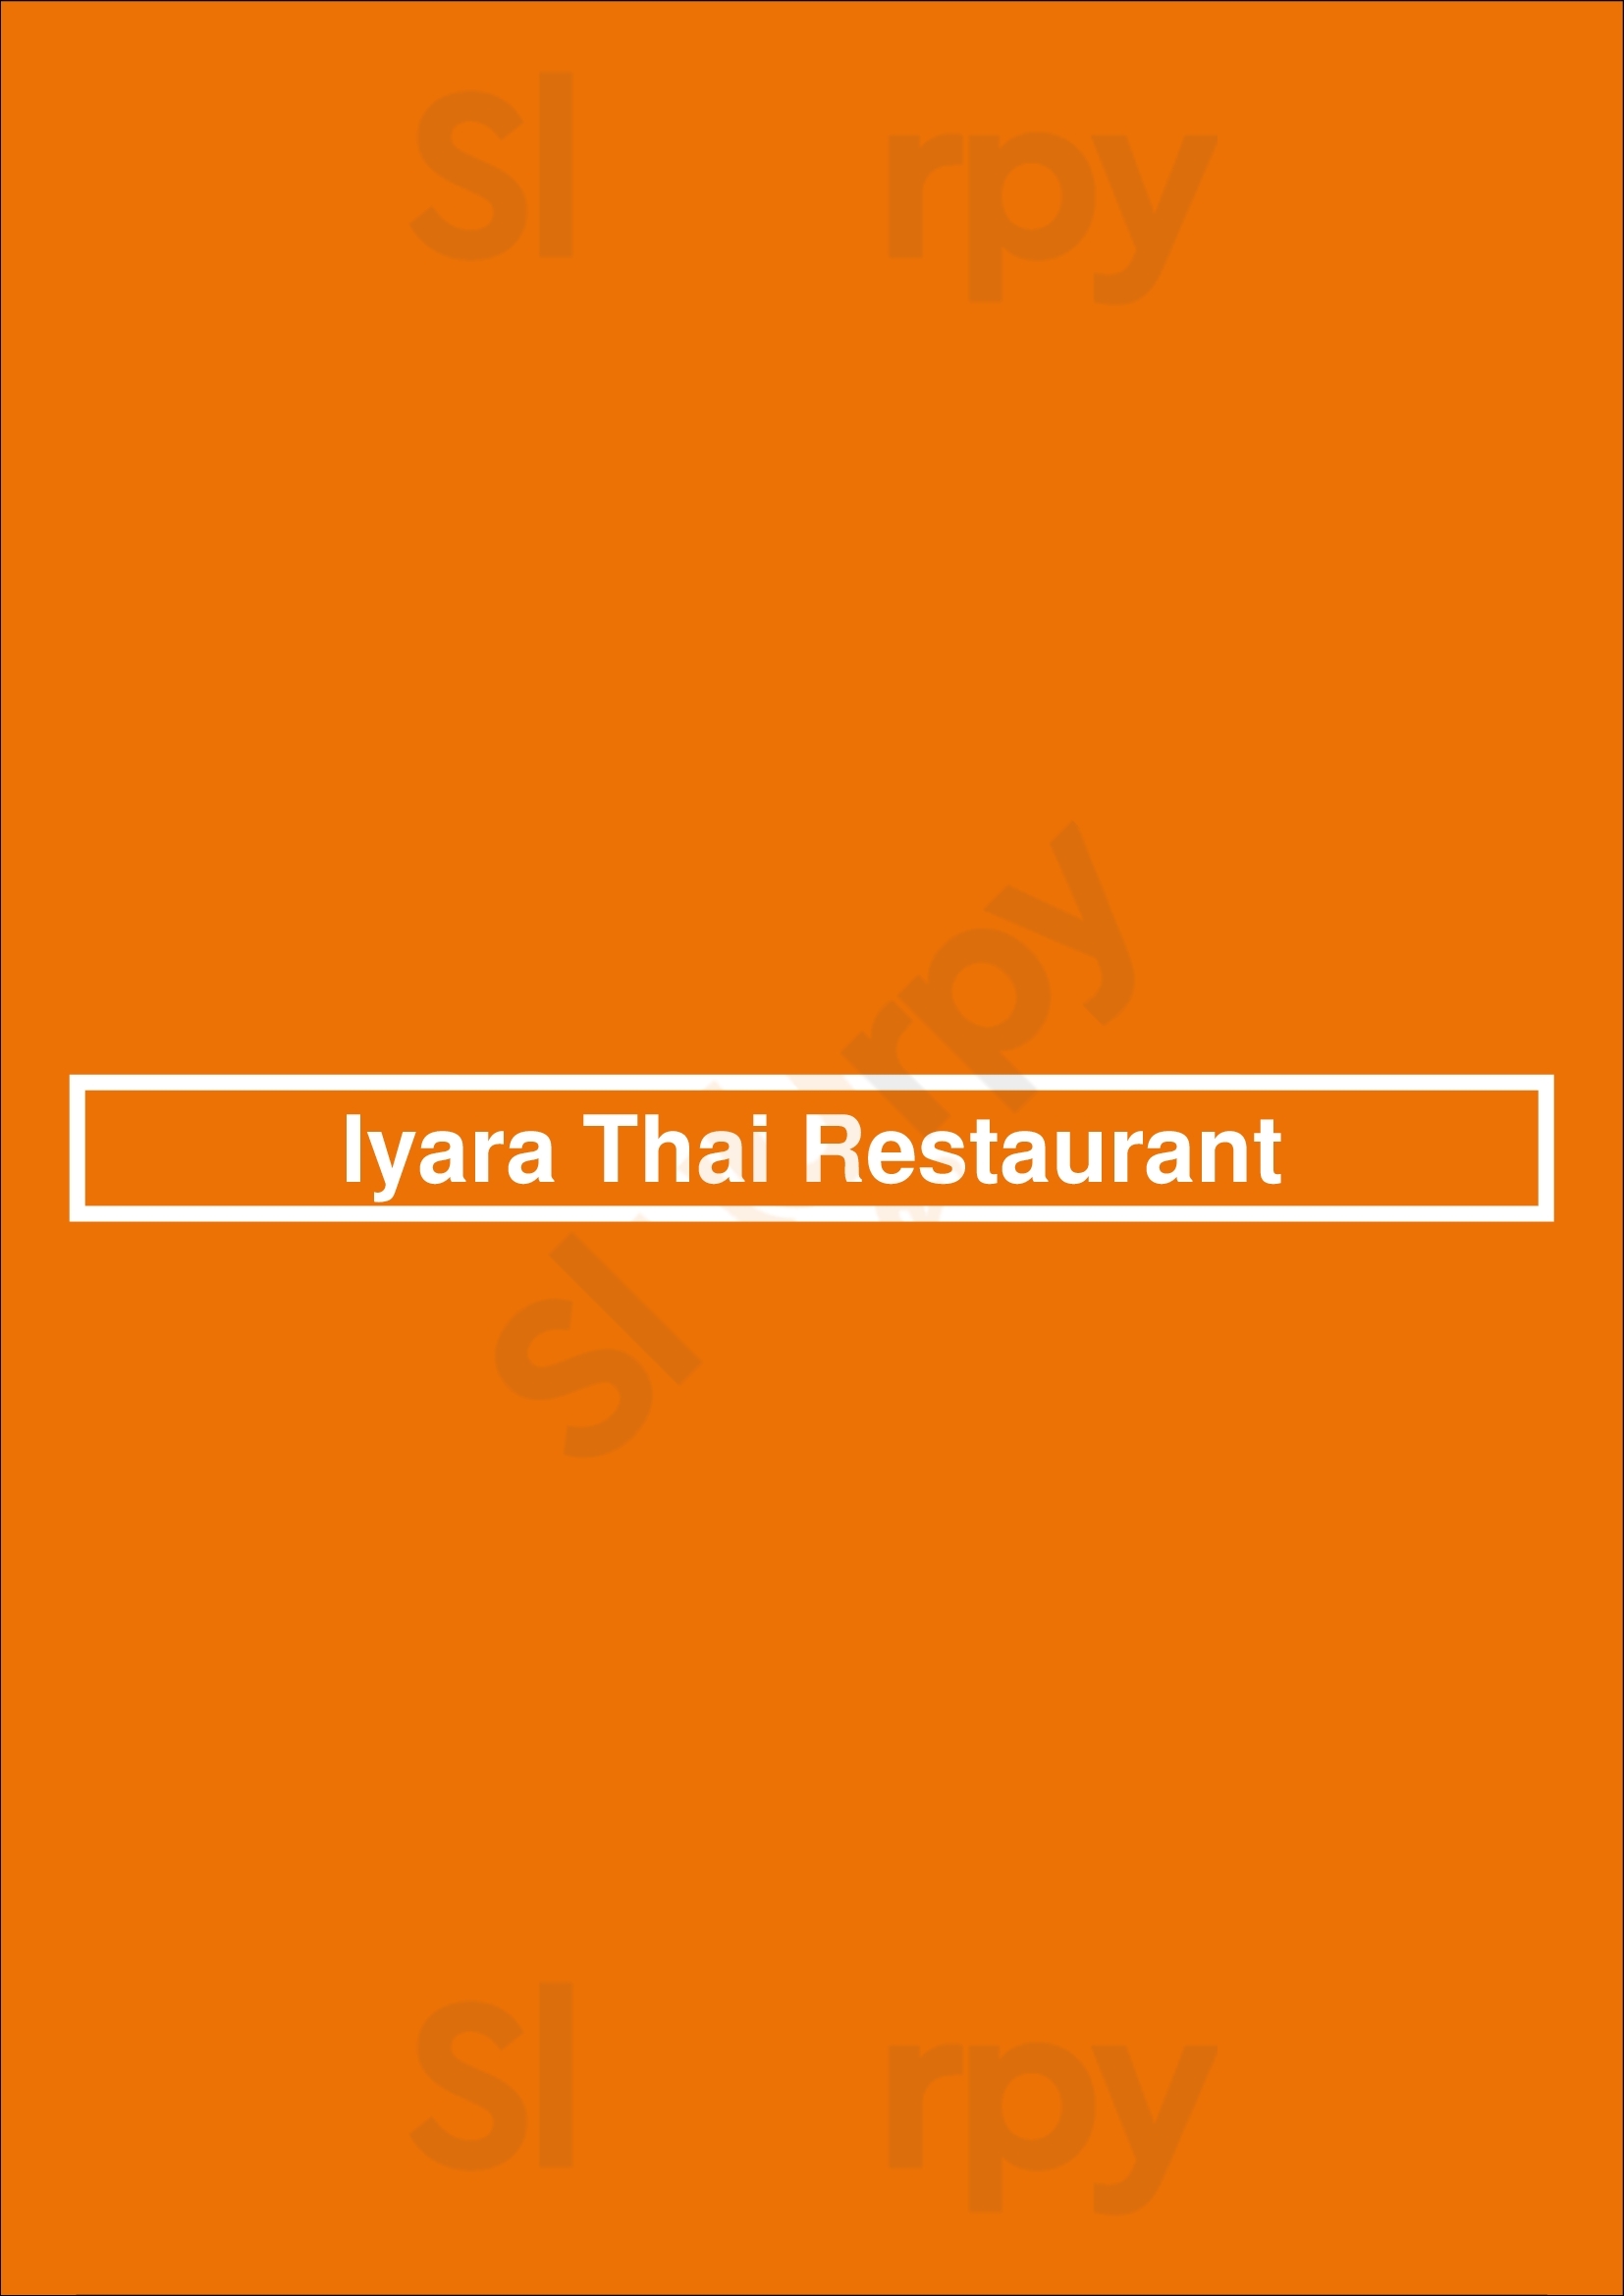 Iyara Thai Restaurant Winnipeg Menu - 1